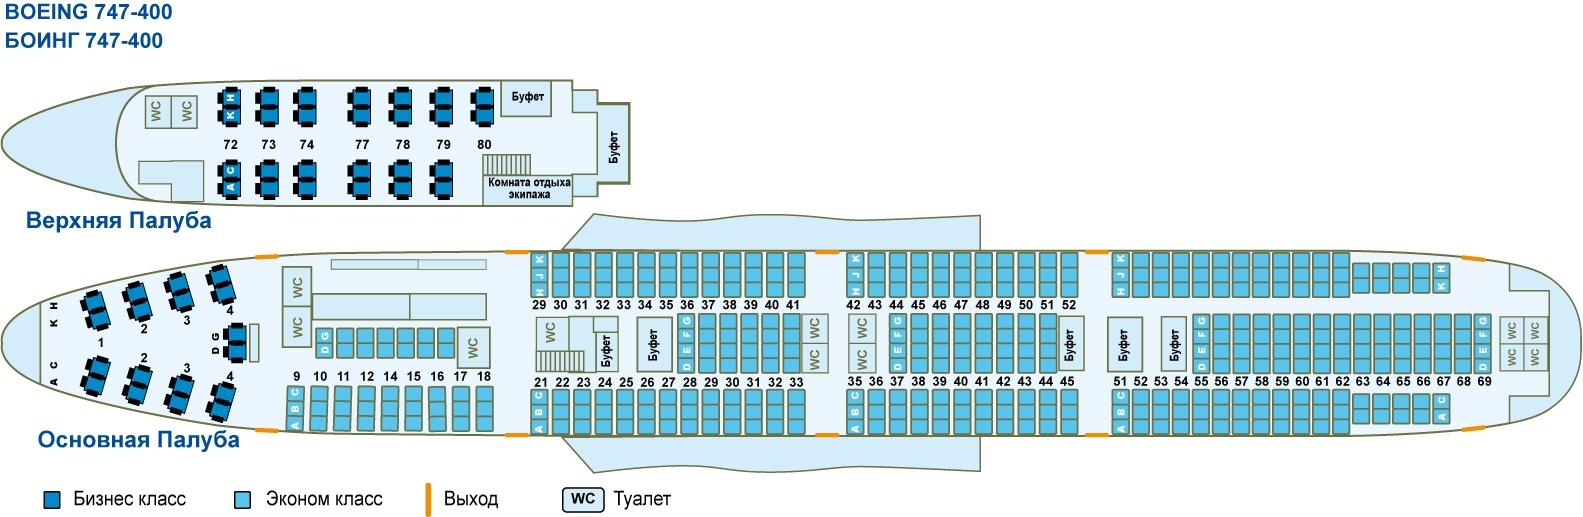 Схема салона пассажирского самолета В-747-400